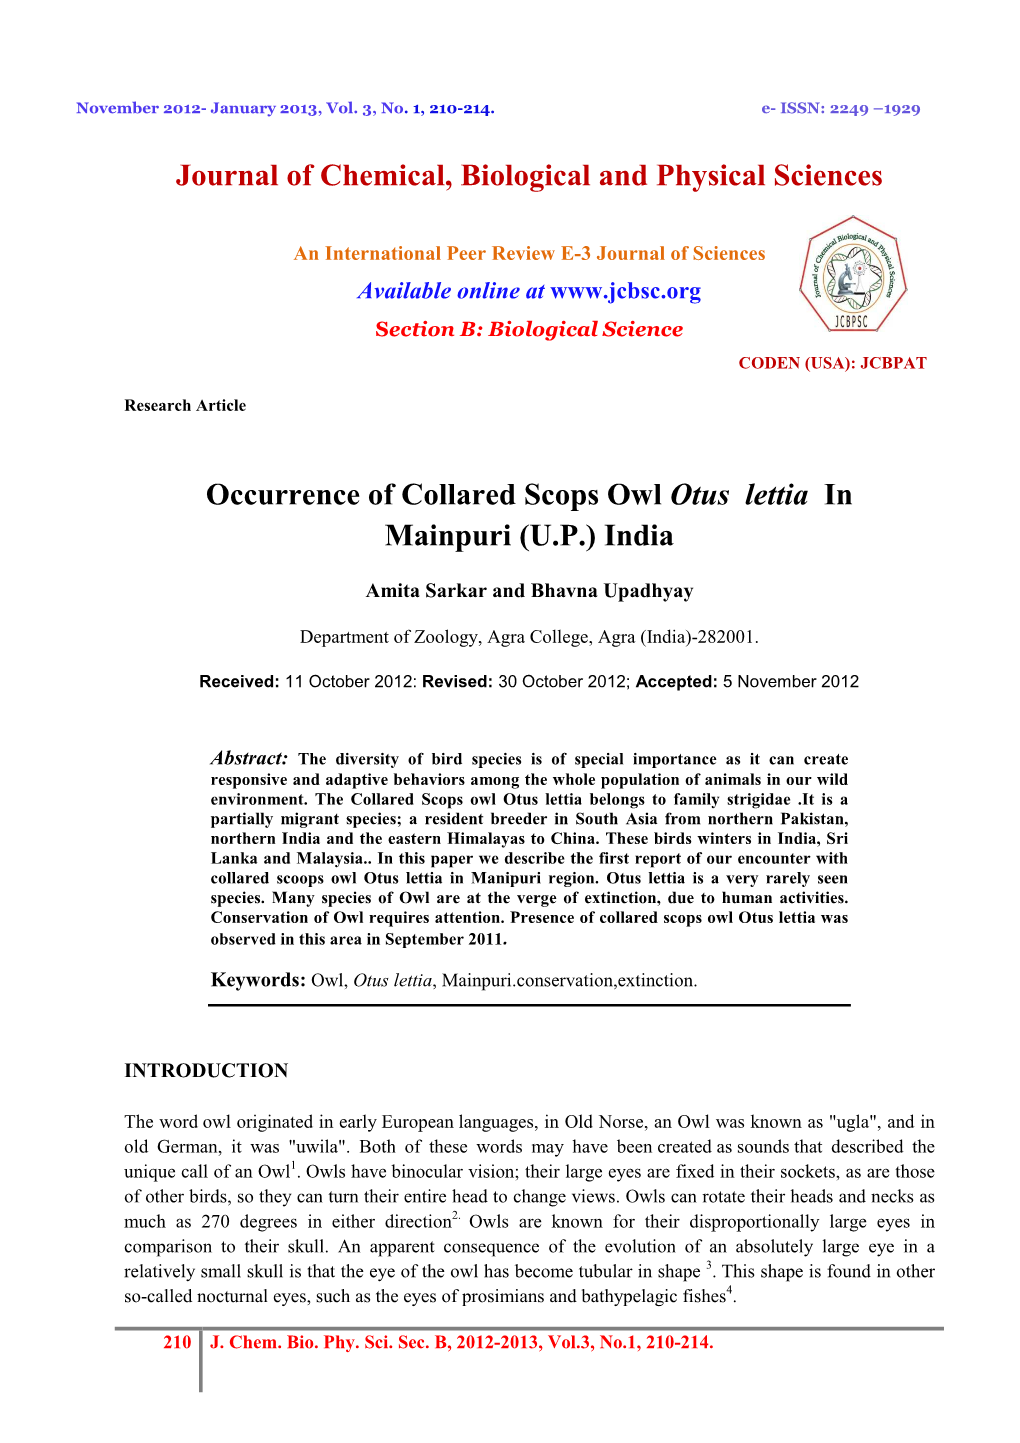 Occurrence of Collared Scops Owl Otus Lettia in Mainpuri (U.P.) India